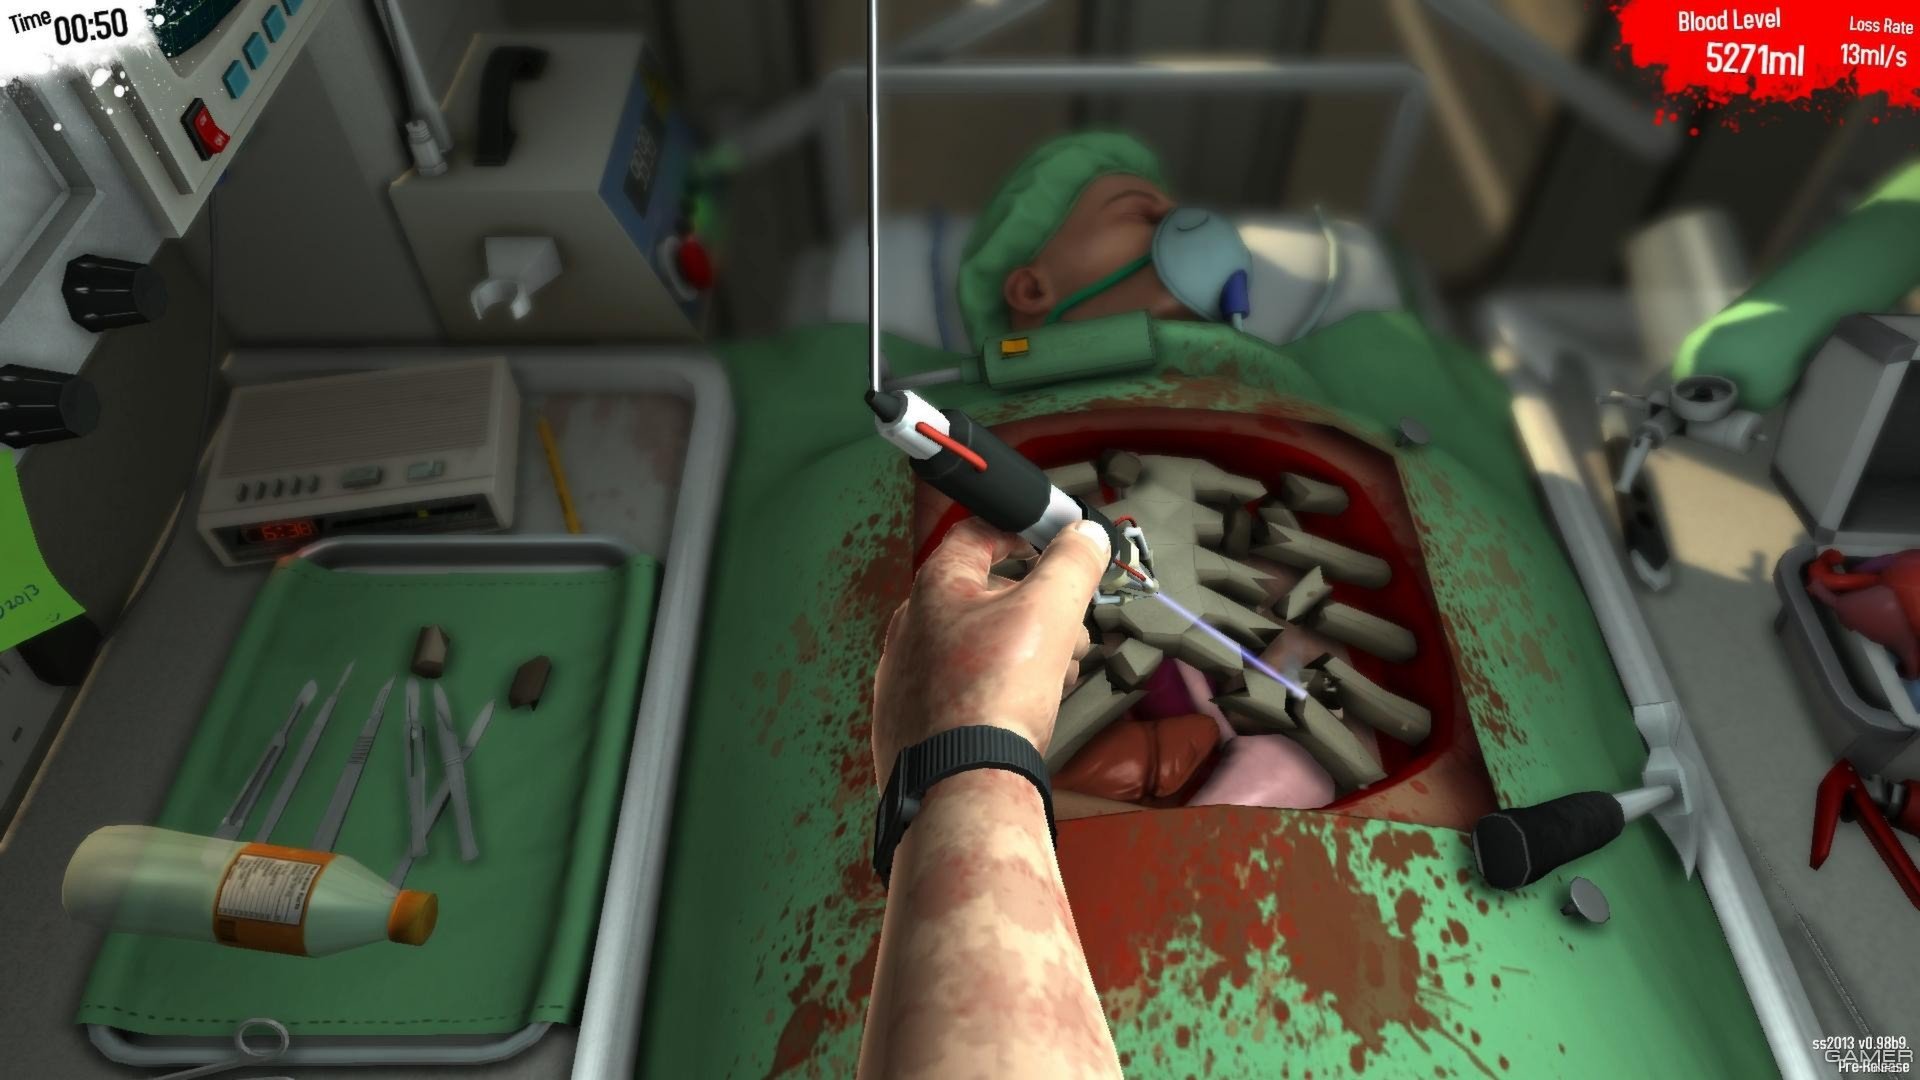 surgeon simulator 2013 full screen